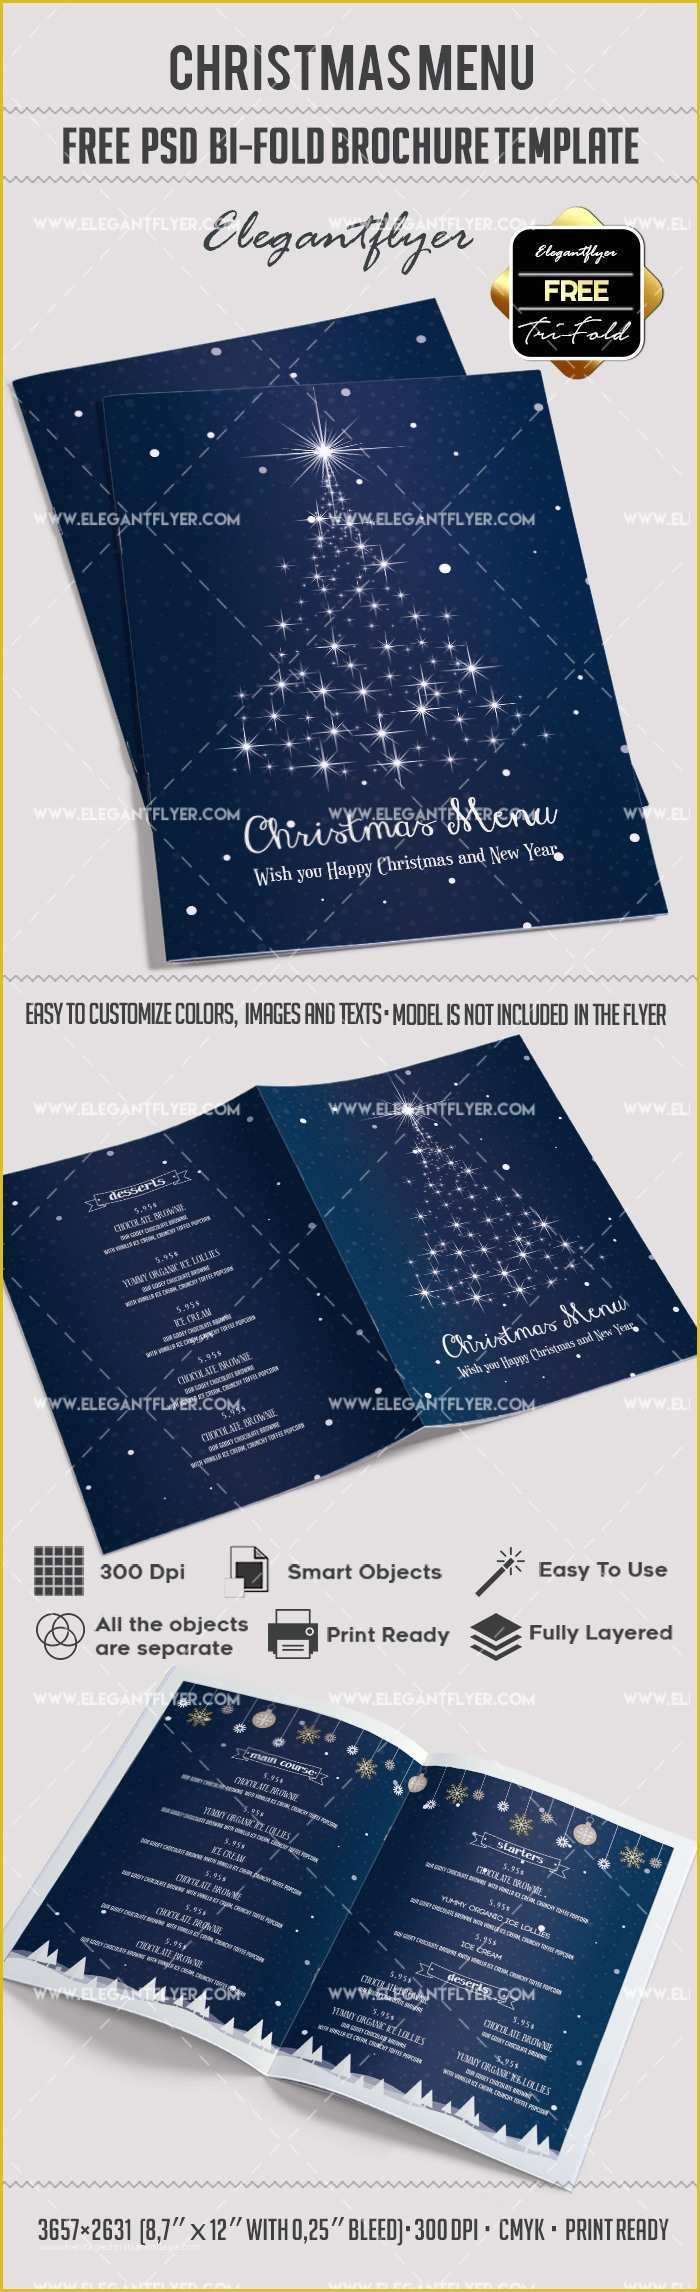 Free Folding Menu Template Of Free Christmas Menu – Bi Fold Psd Brochure Template – by